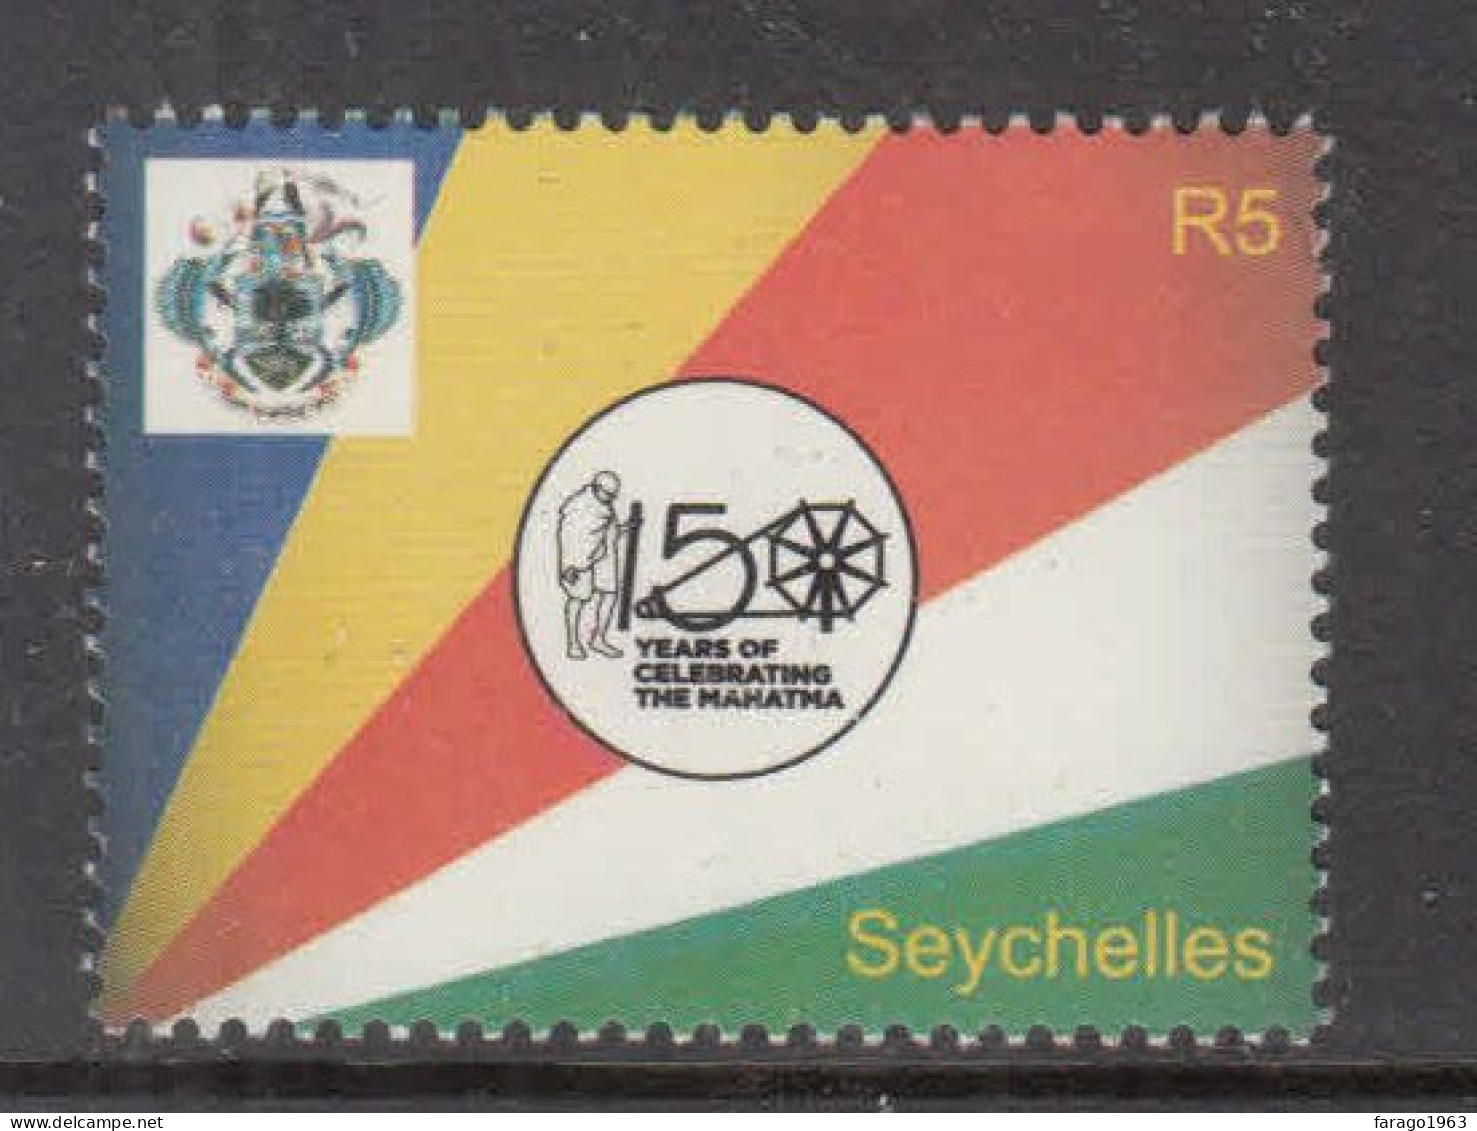 2019 Seychelles Gandhi Flags Complete Set Of 1 MNH - Seychelles (1976-...)